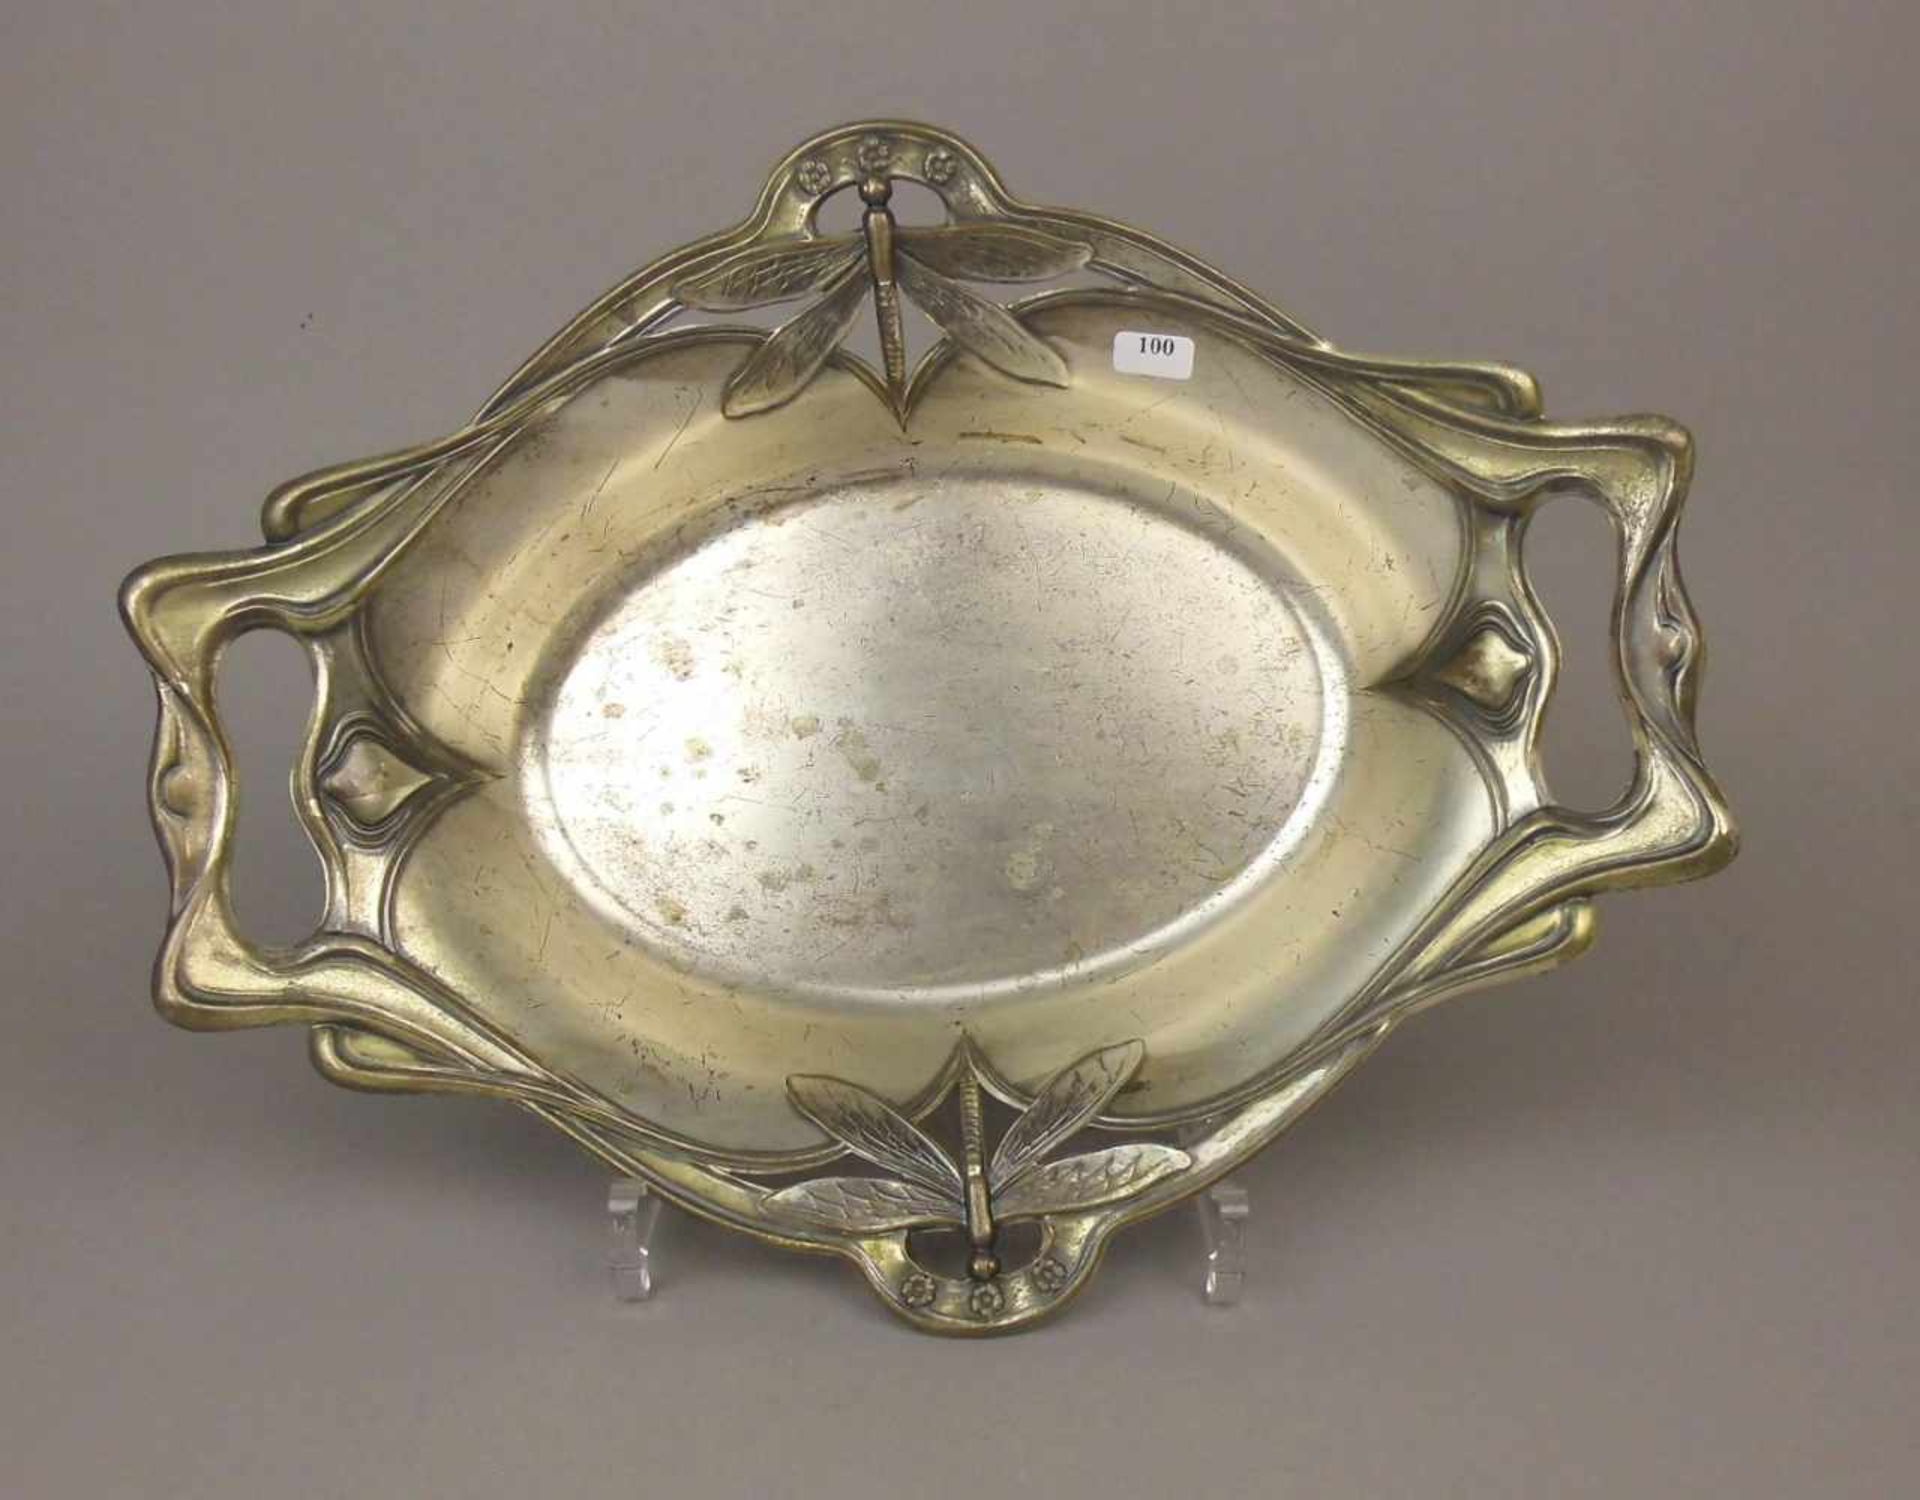 JUGENDSTILSCHALE MIT LIBELLENMOTIV, art nouveau bowl with dragonfly, versilbertes Metall (